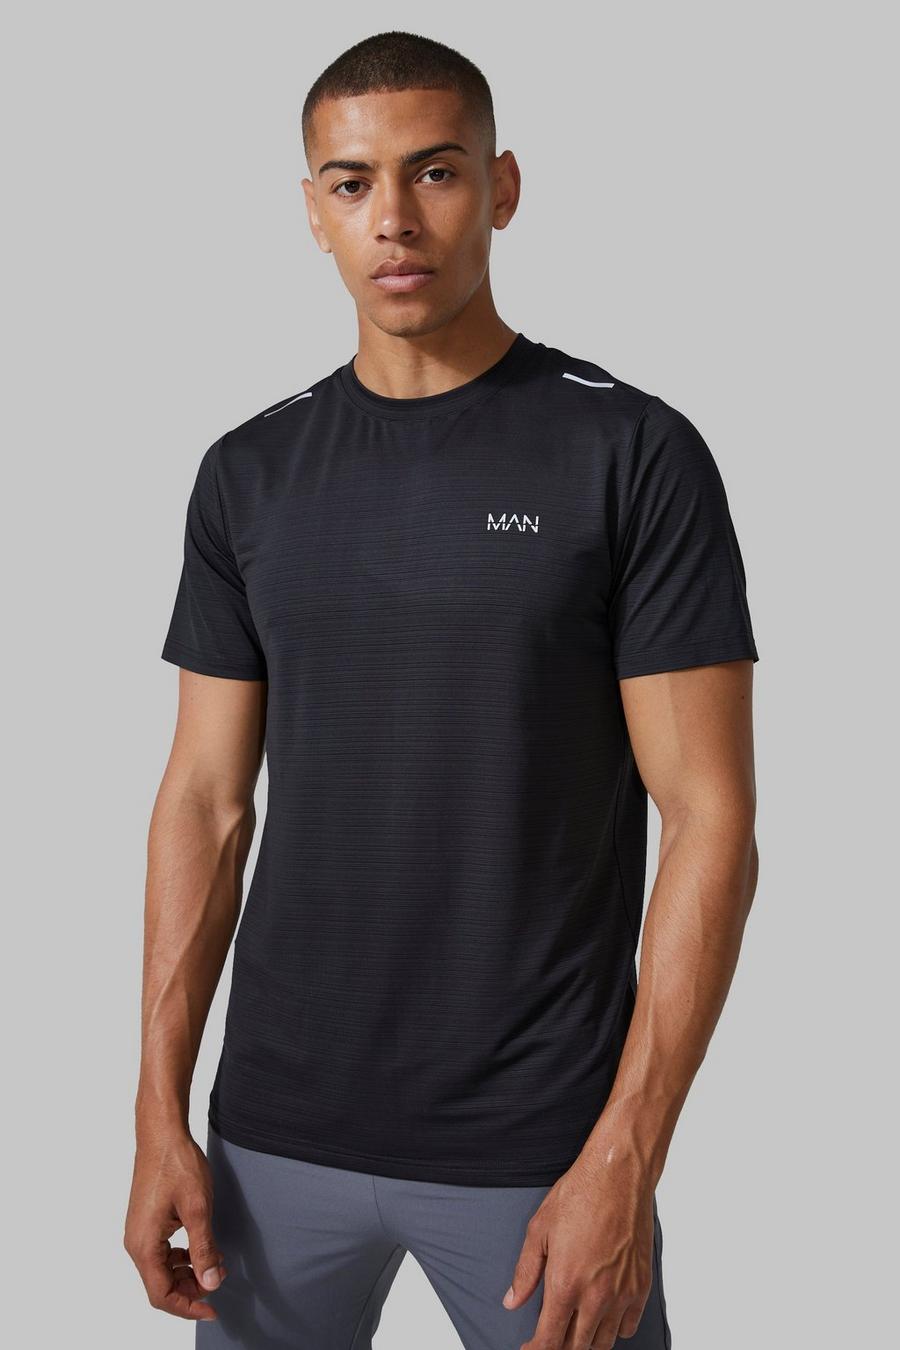 Man Active Lightweight Performance T-Shirt, Black image number 1